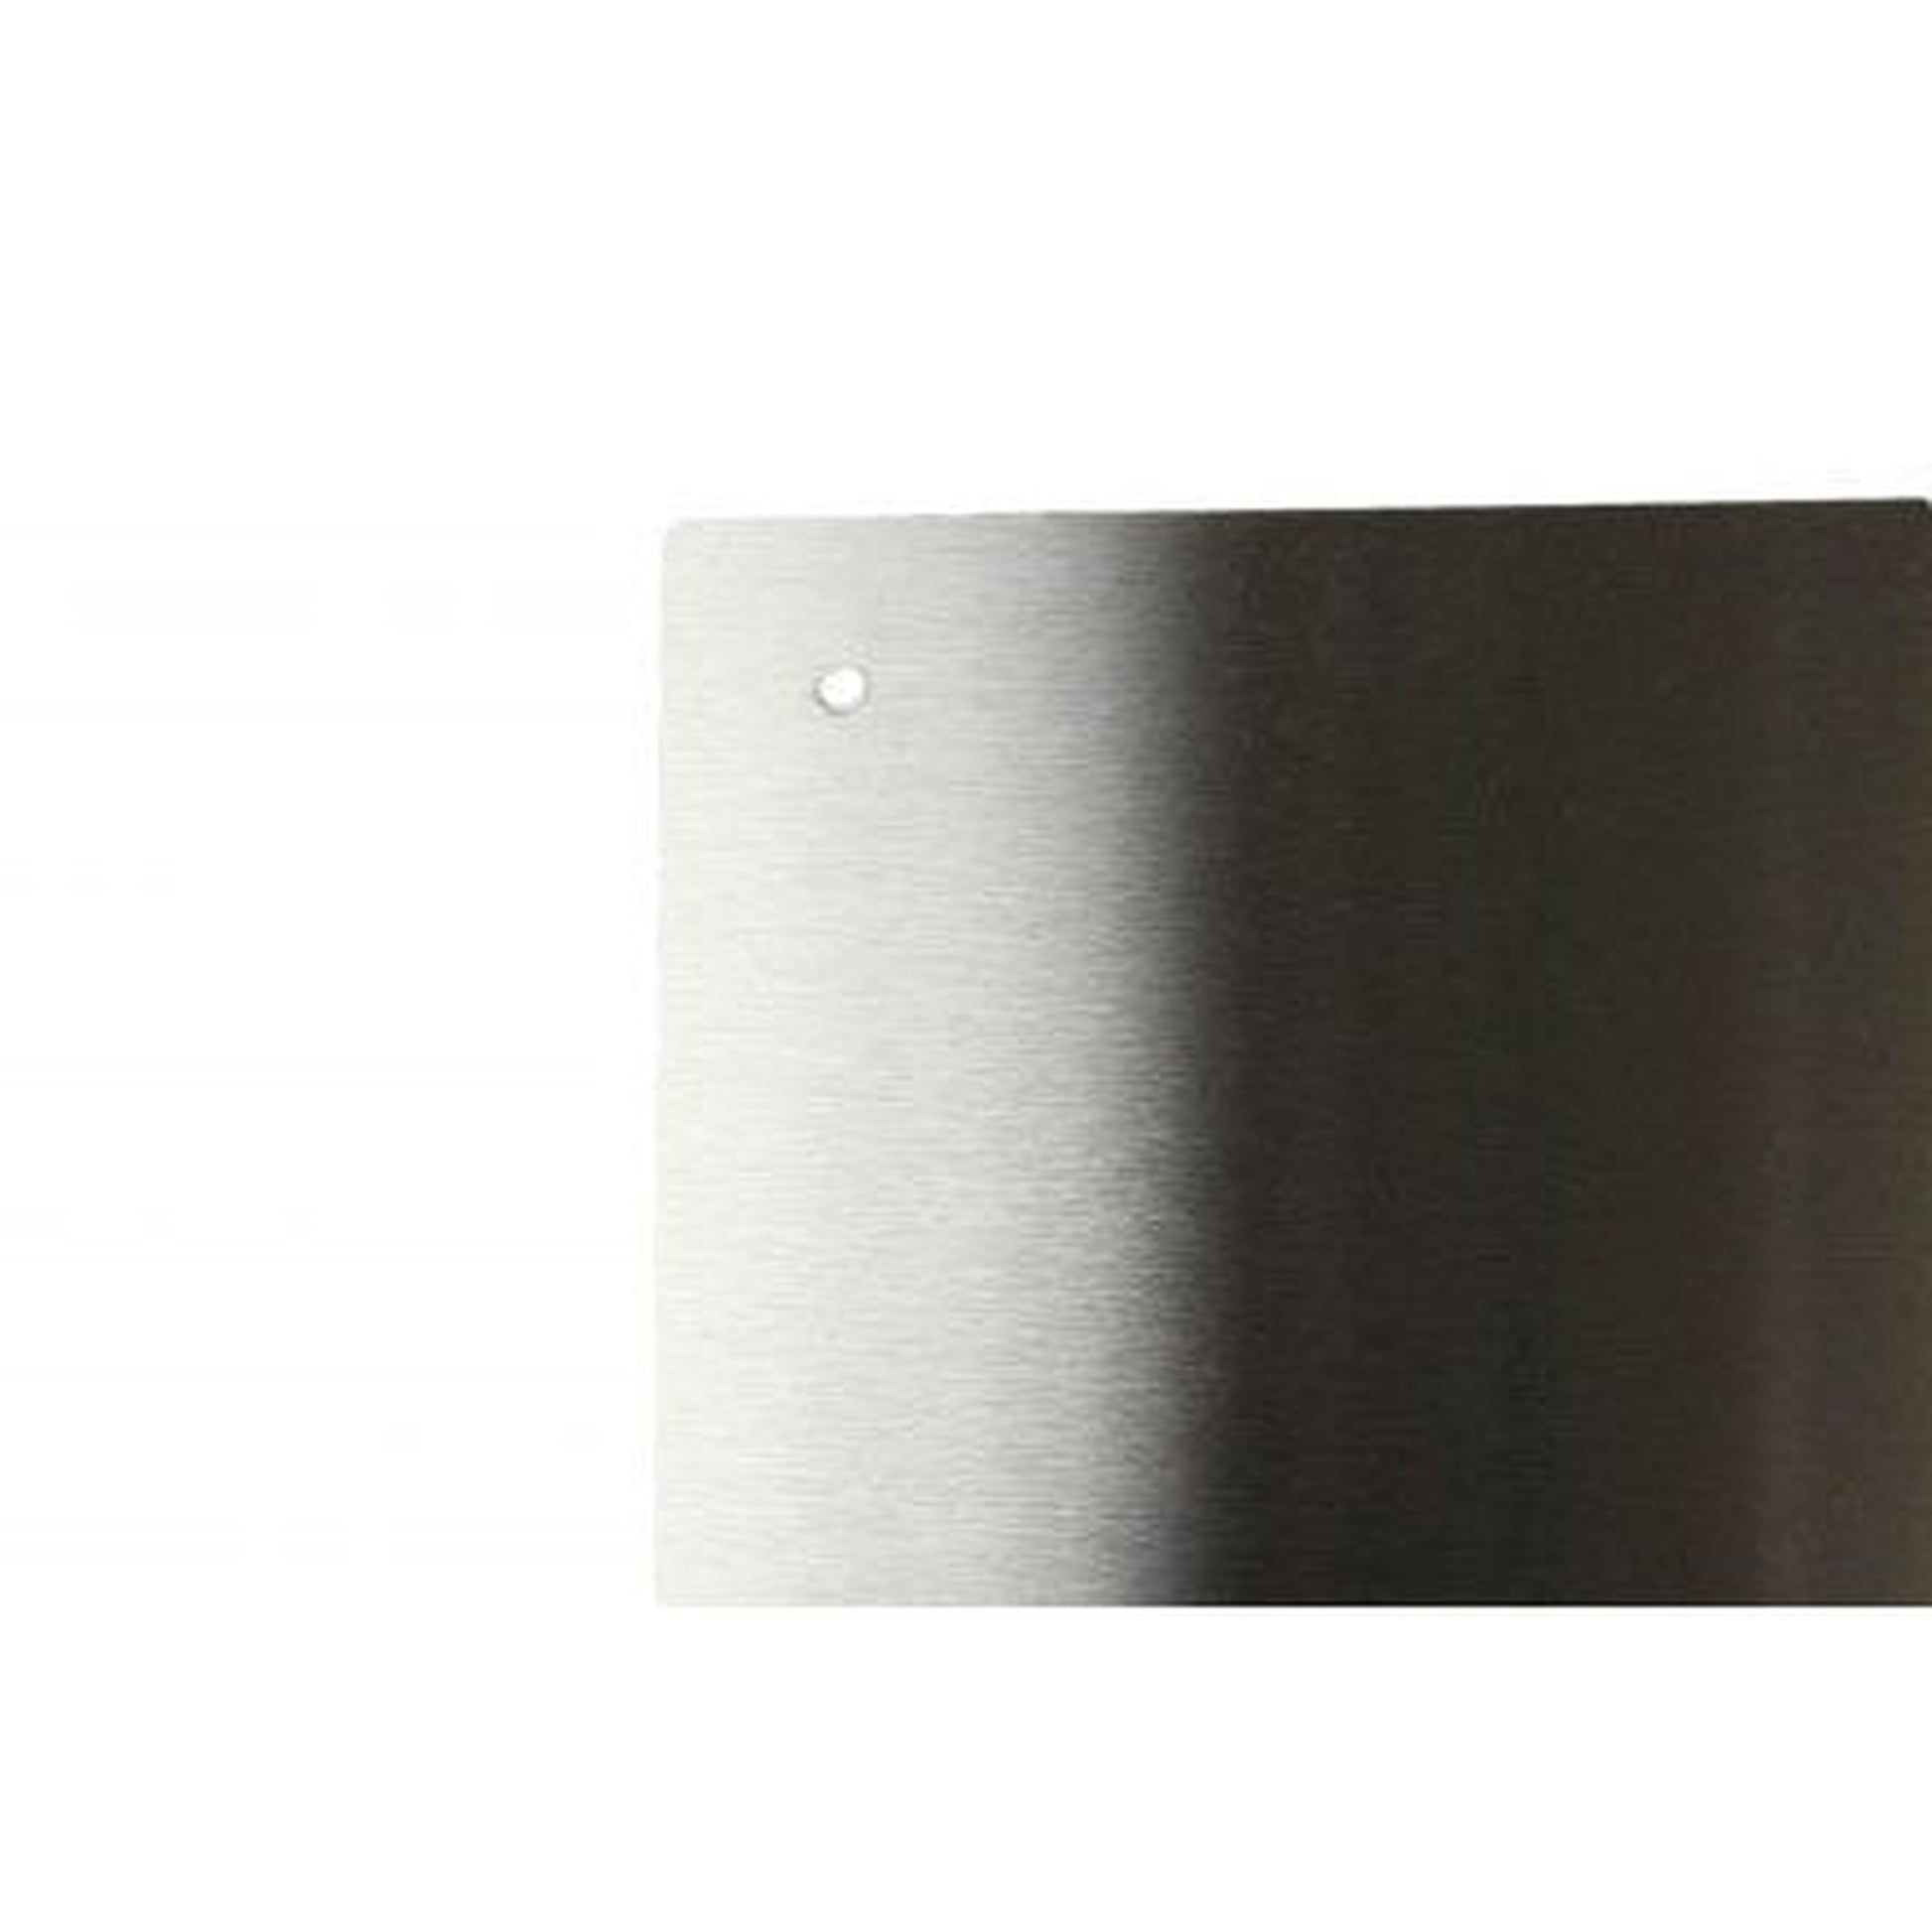 Frost 34 x 0.5 x 10 Stainless Steel Satin Washroom Accessories